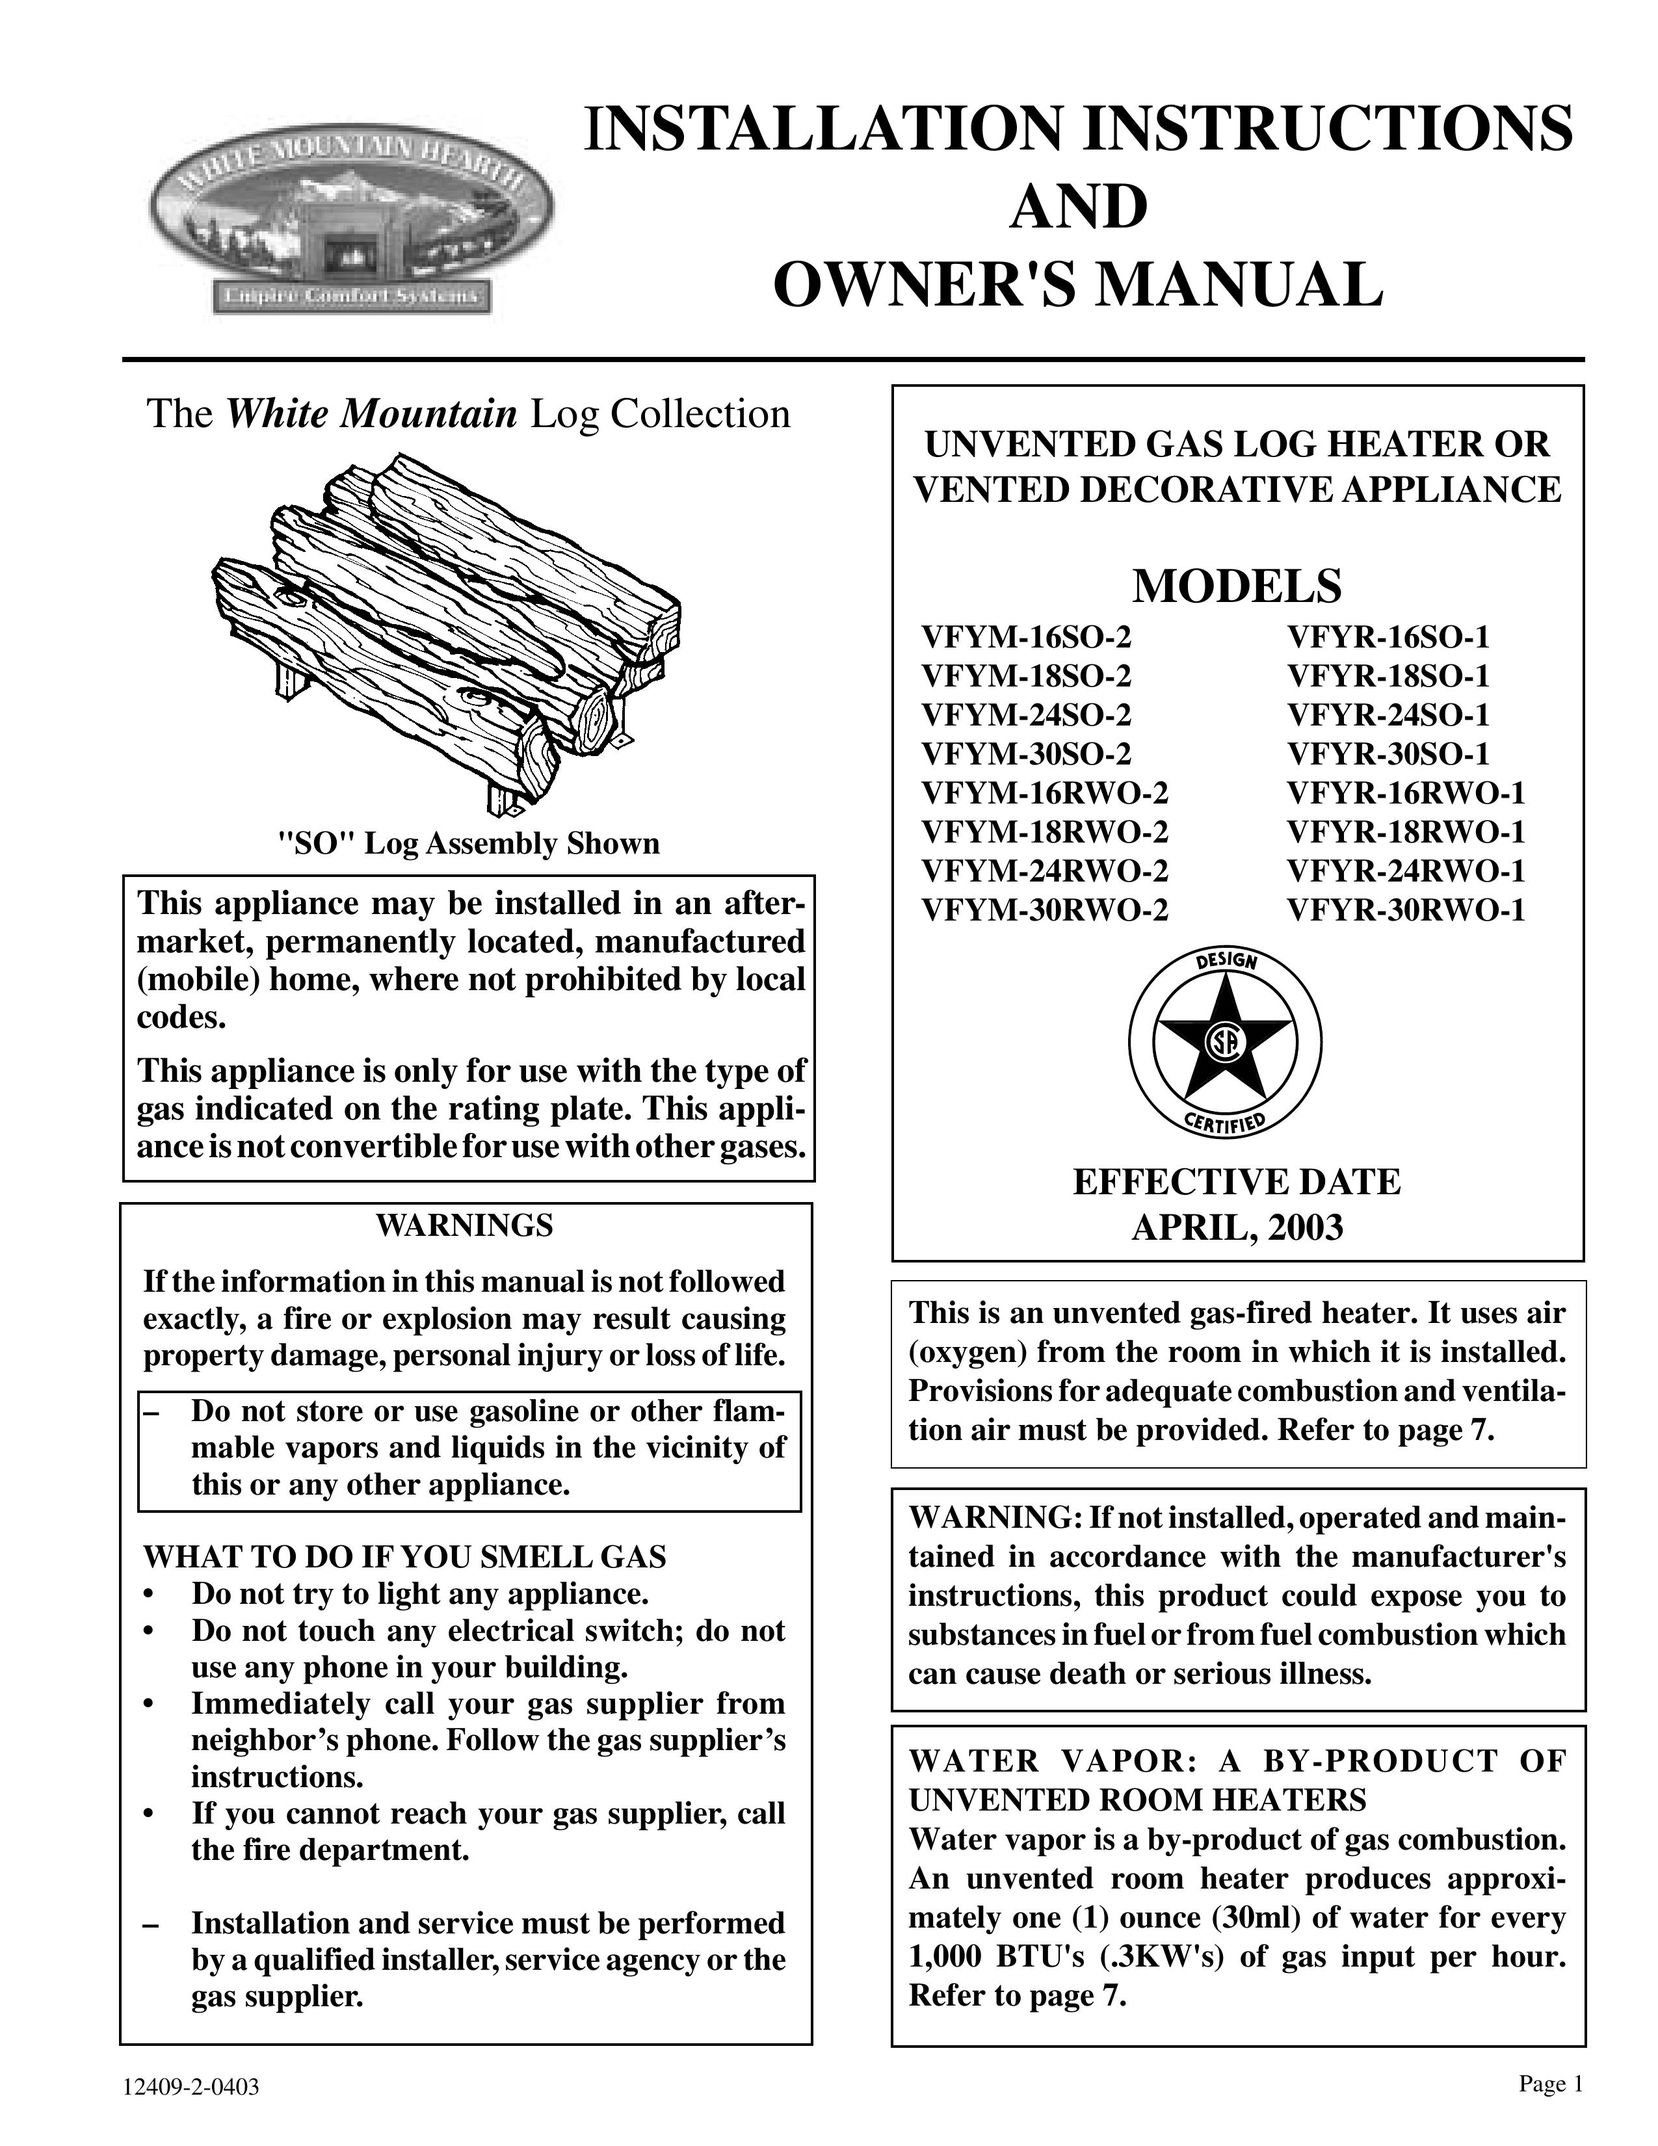 Empire Comfort Systems VFYR-18RWO-1 Water Heater User Manual